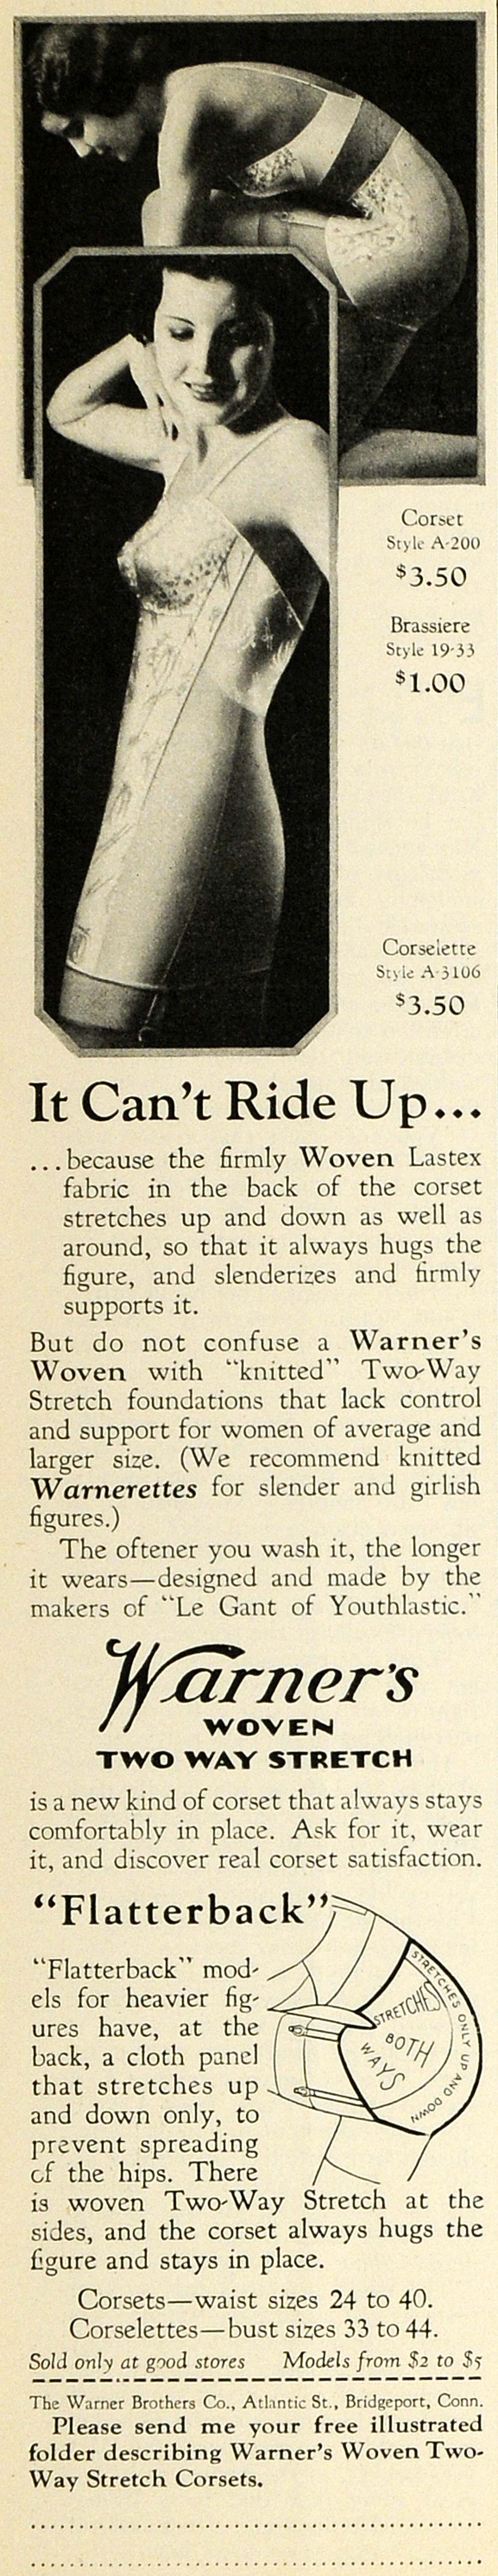 1935 Ad Warners Woven Two Way Stretch Corset Brassiere - ORIGINAL MCC5